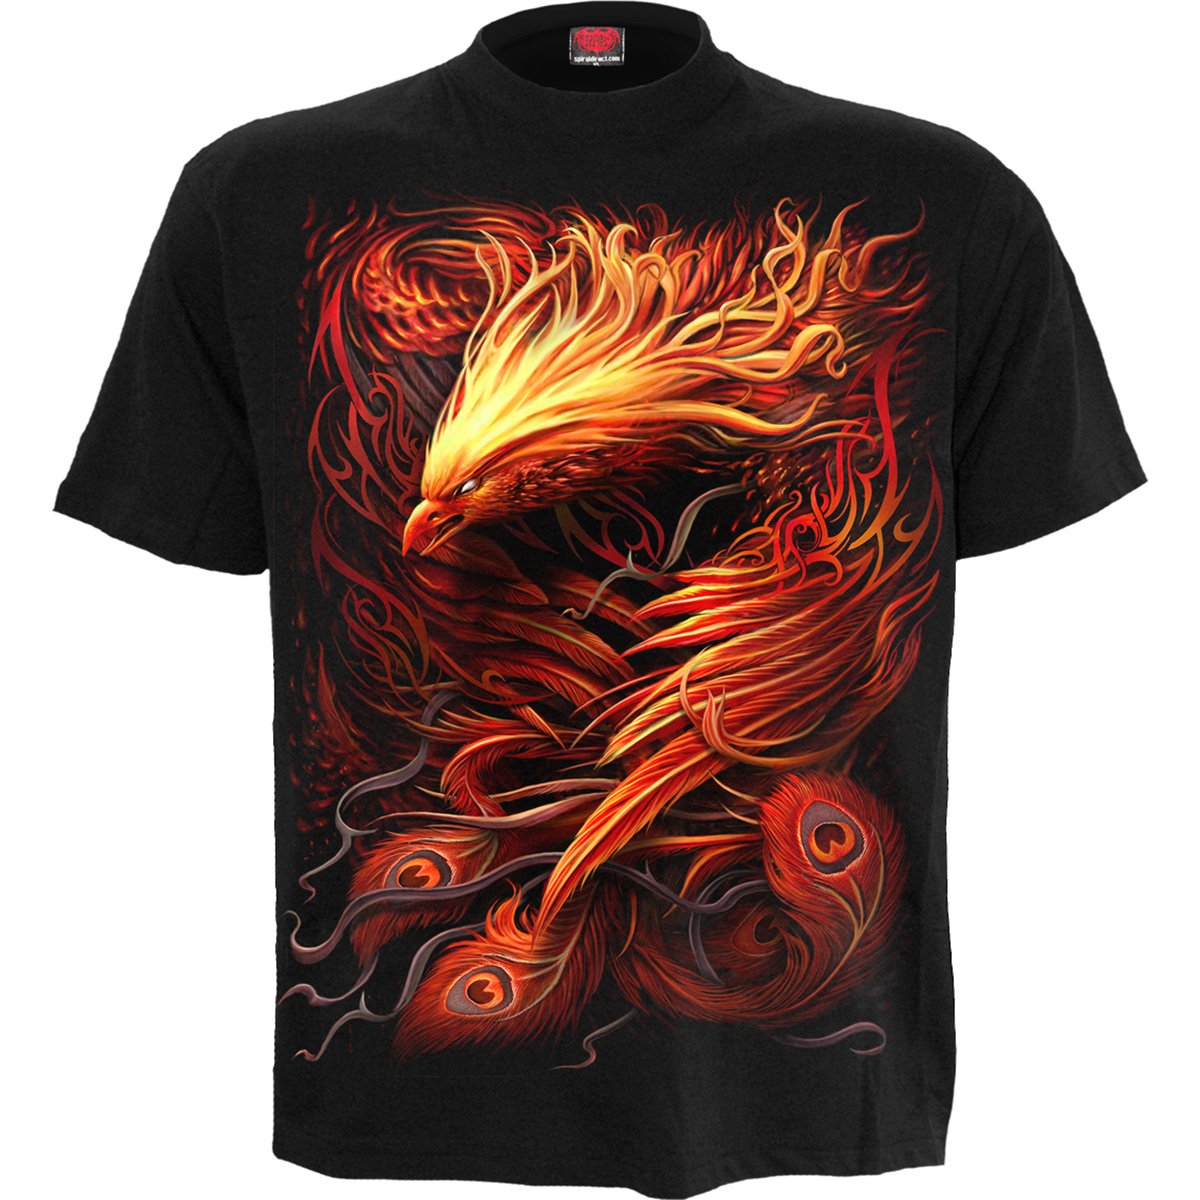 PHOENIX ARISEN - T-Shirt Black - Spiral USA